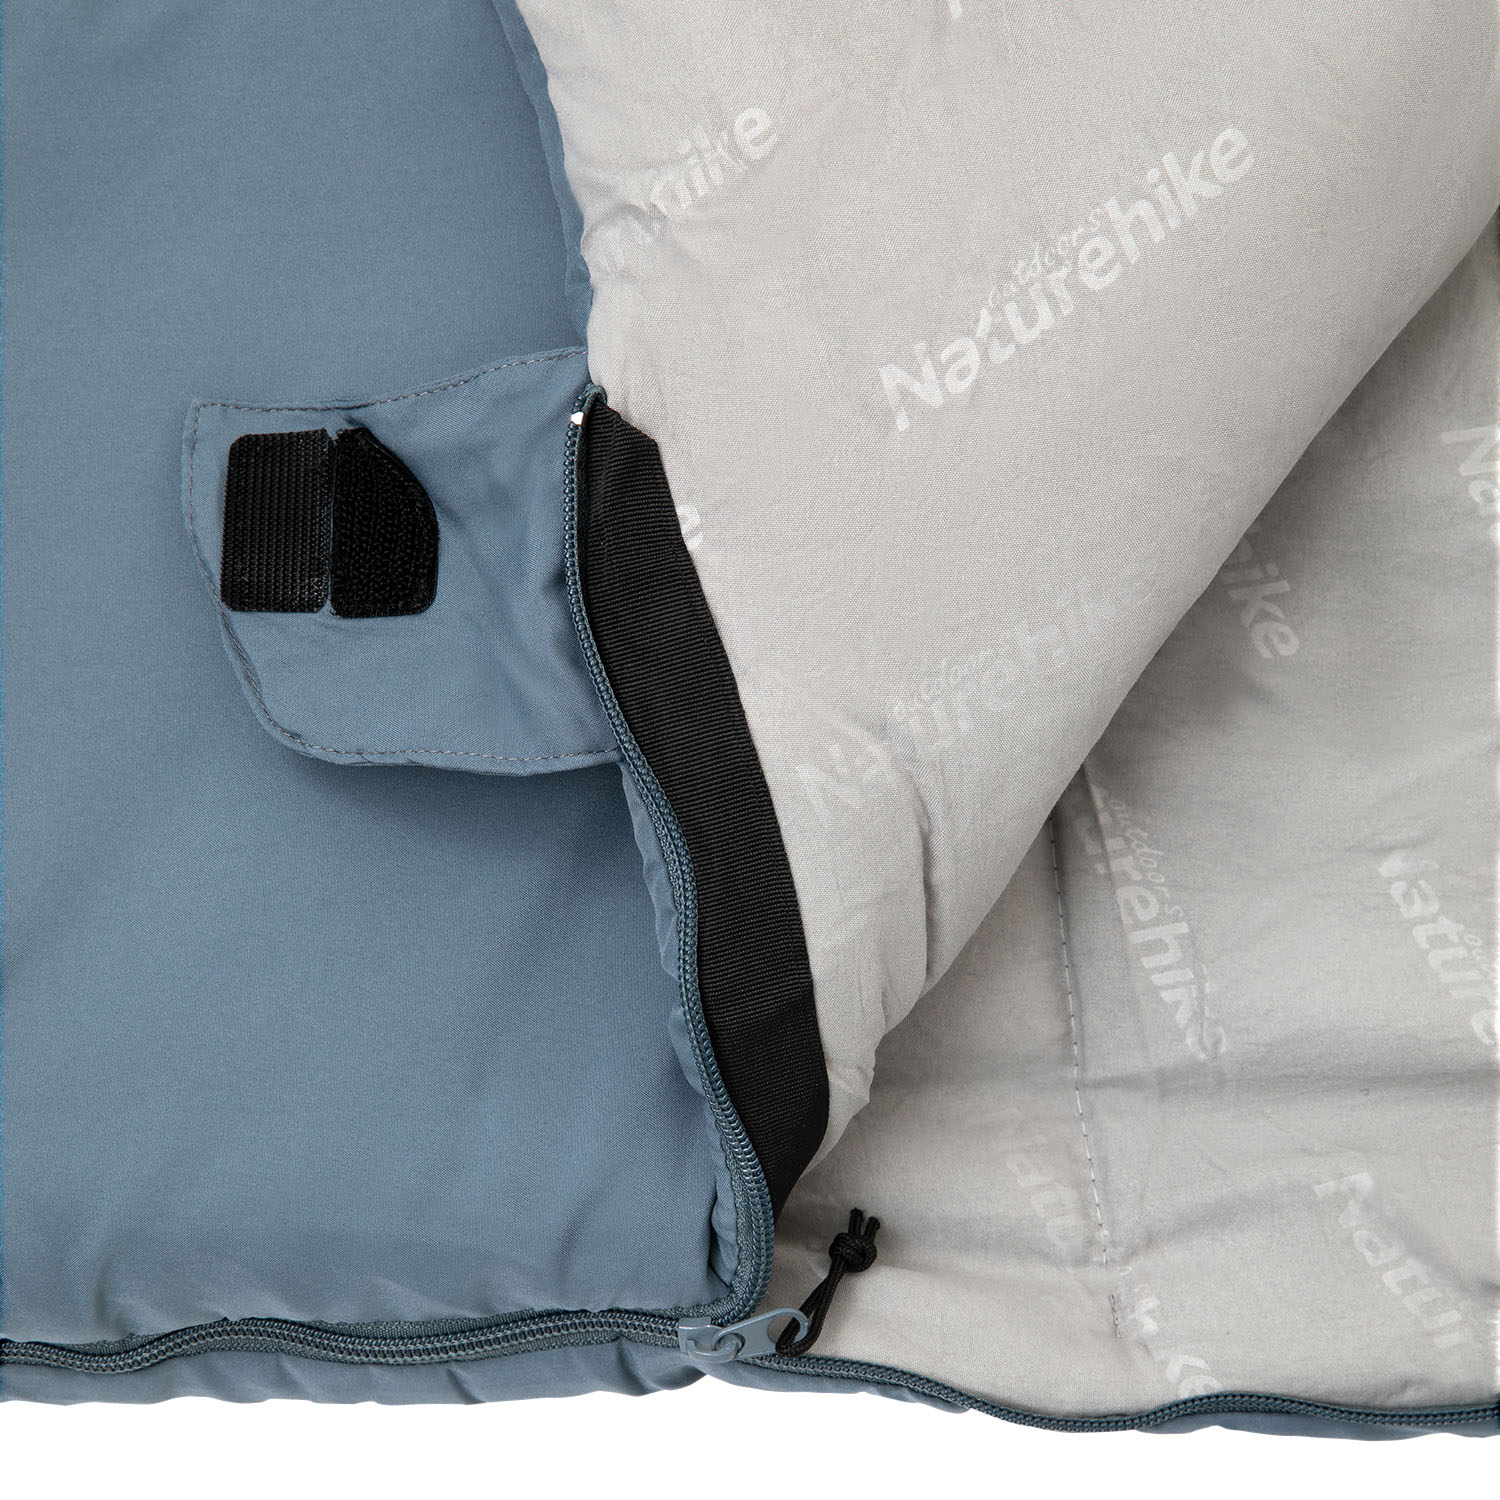 Спальник Naturehike Double cotton sleeping bag with pillow Shadow Blue